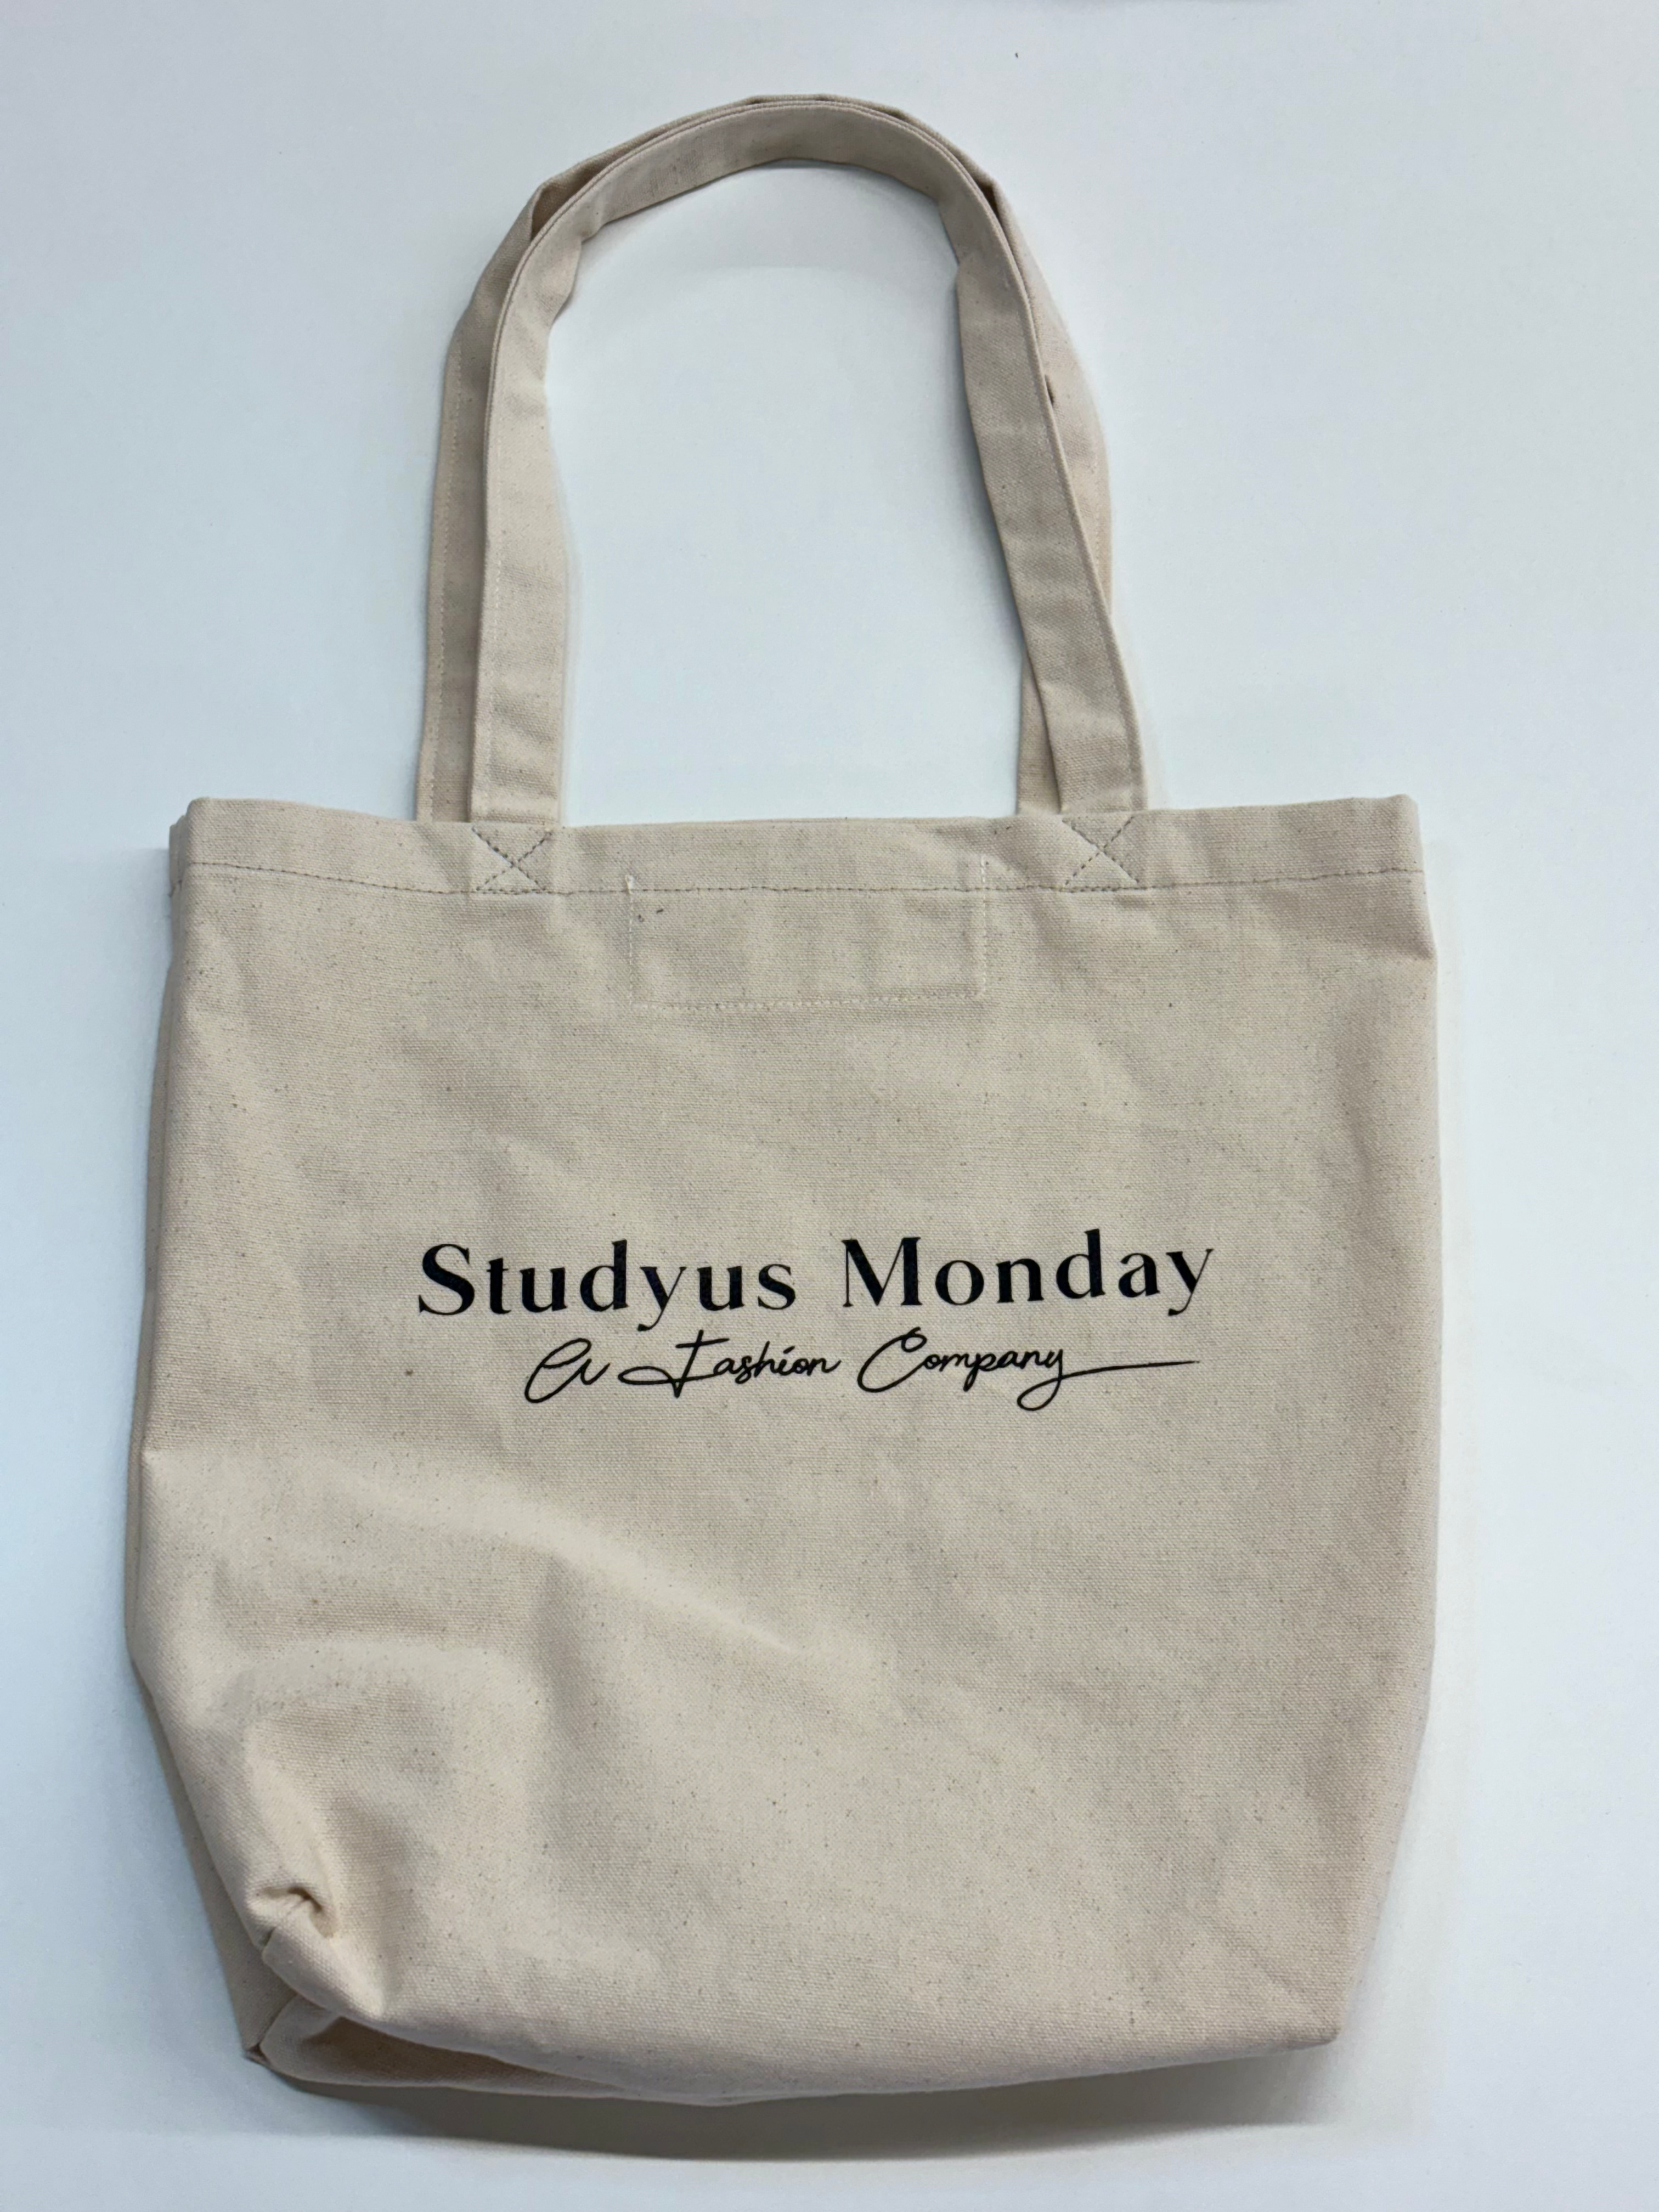 The Studyus Monday Tote